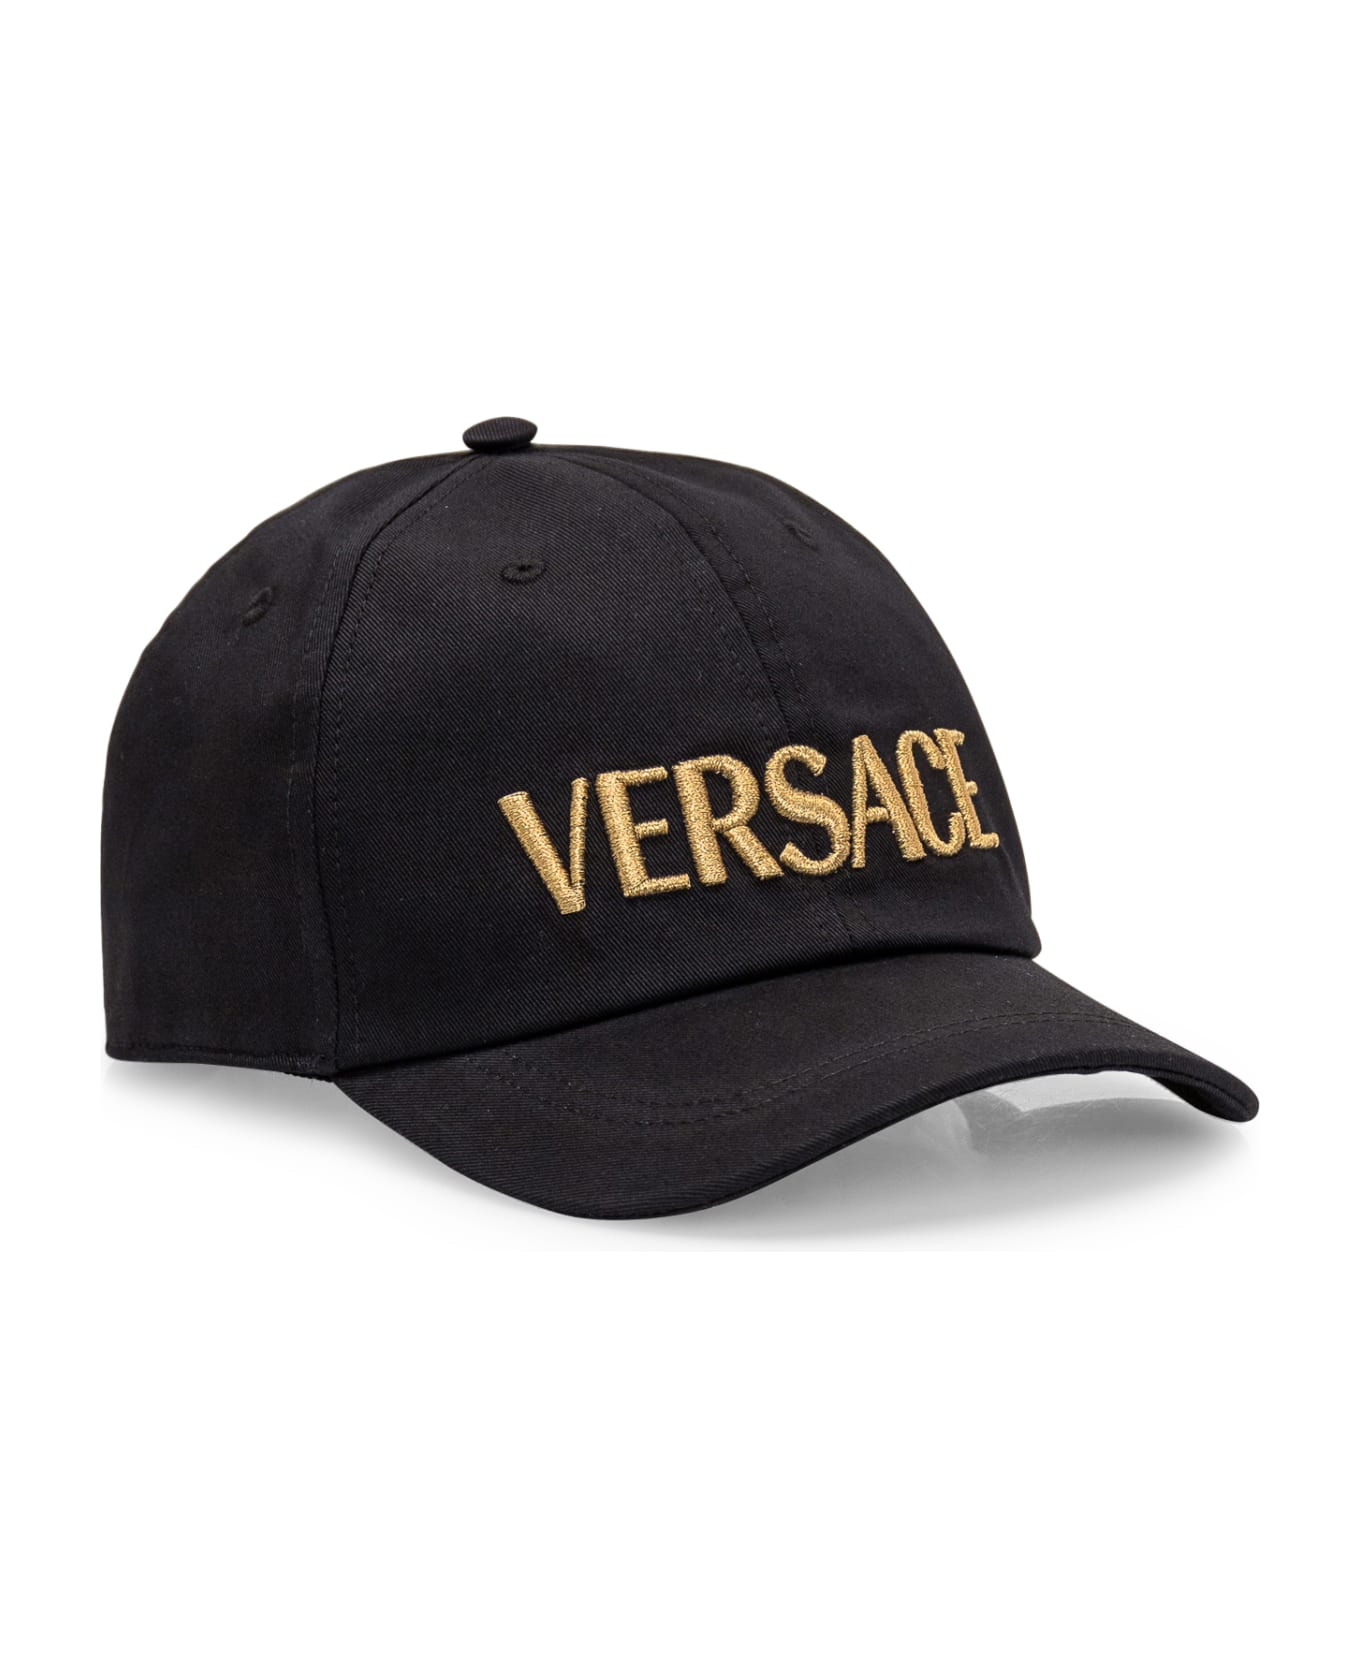 Versace Logo Baseball Cap - Black Gold